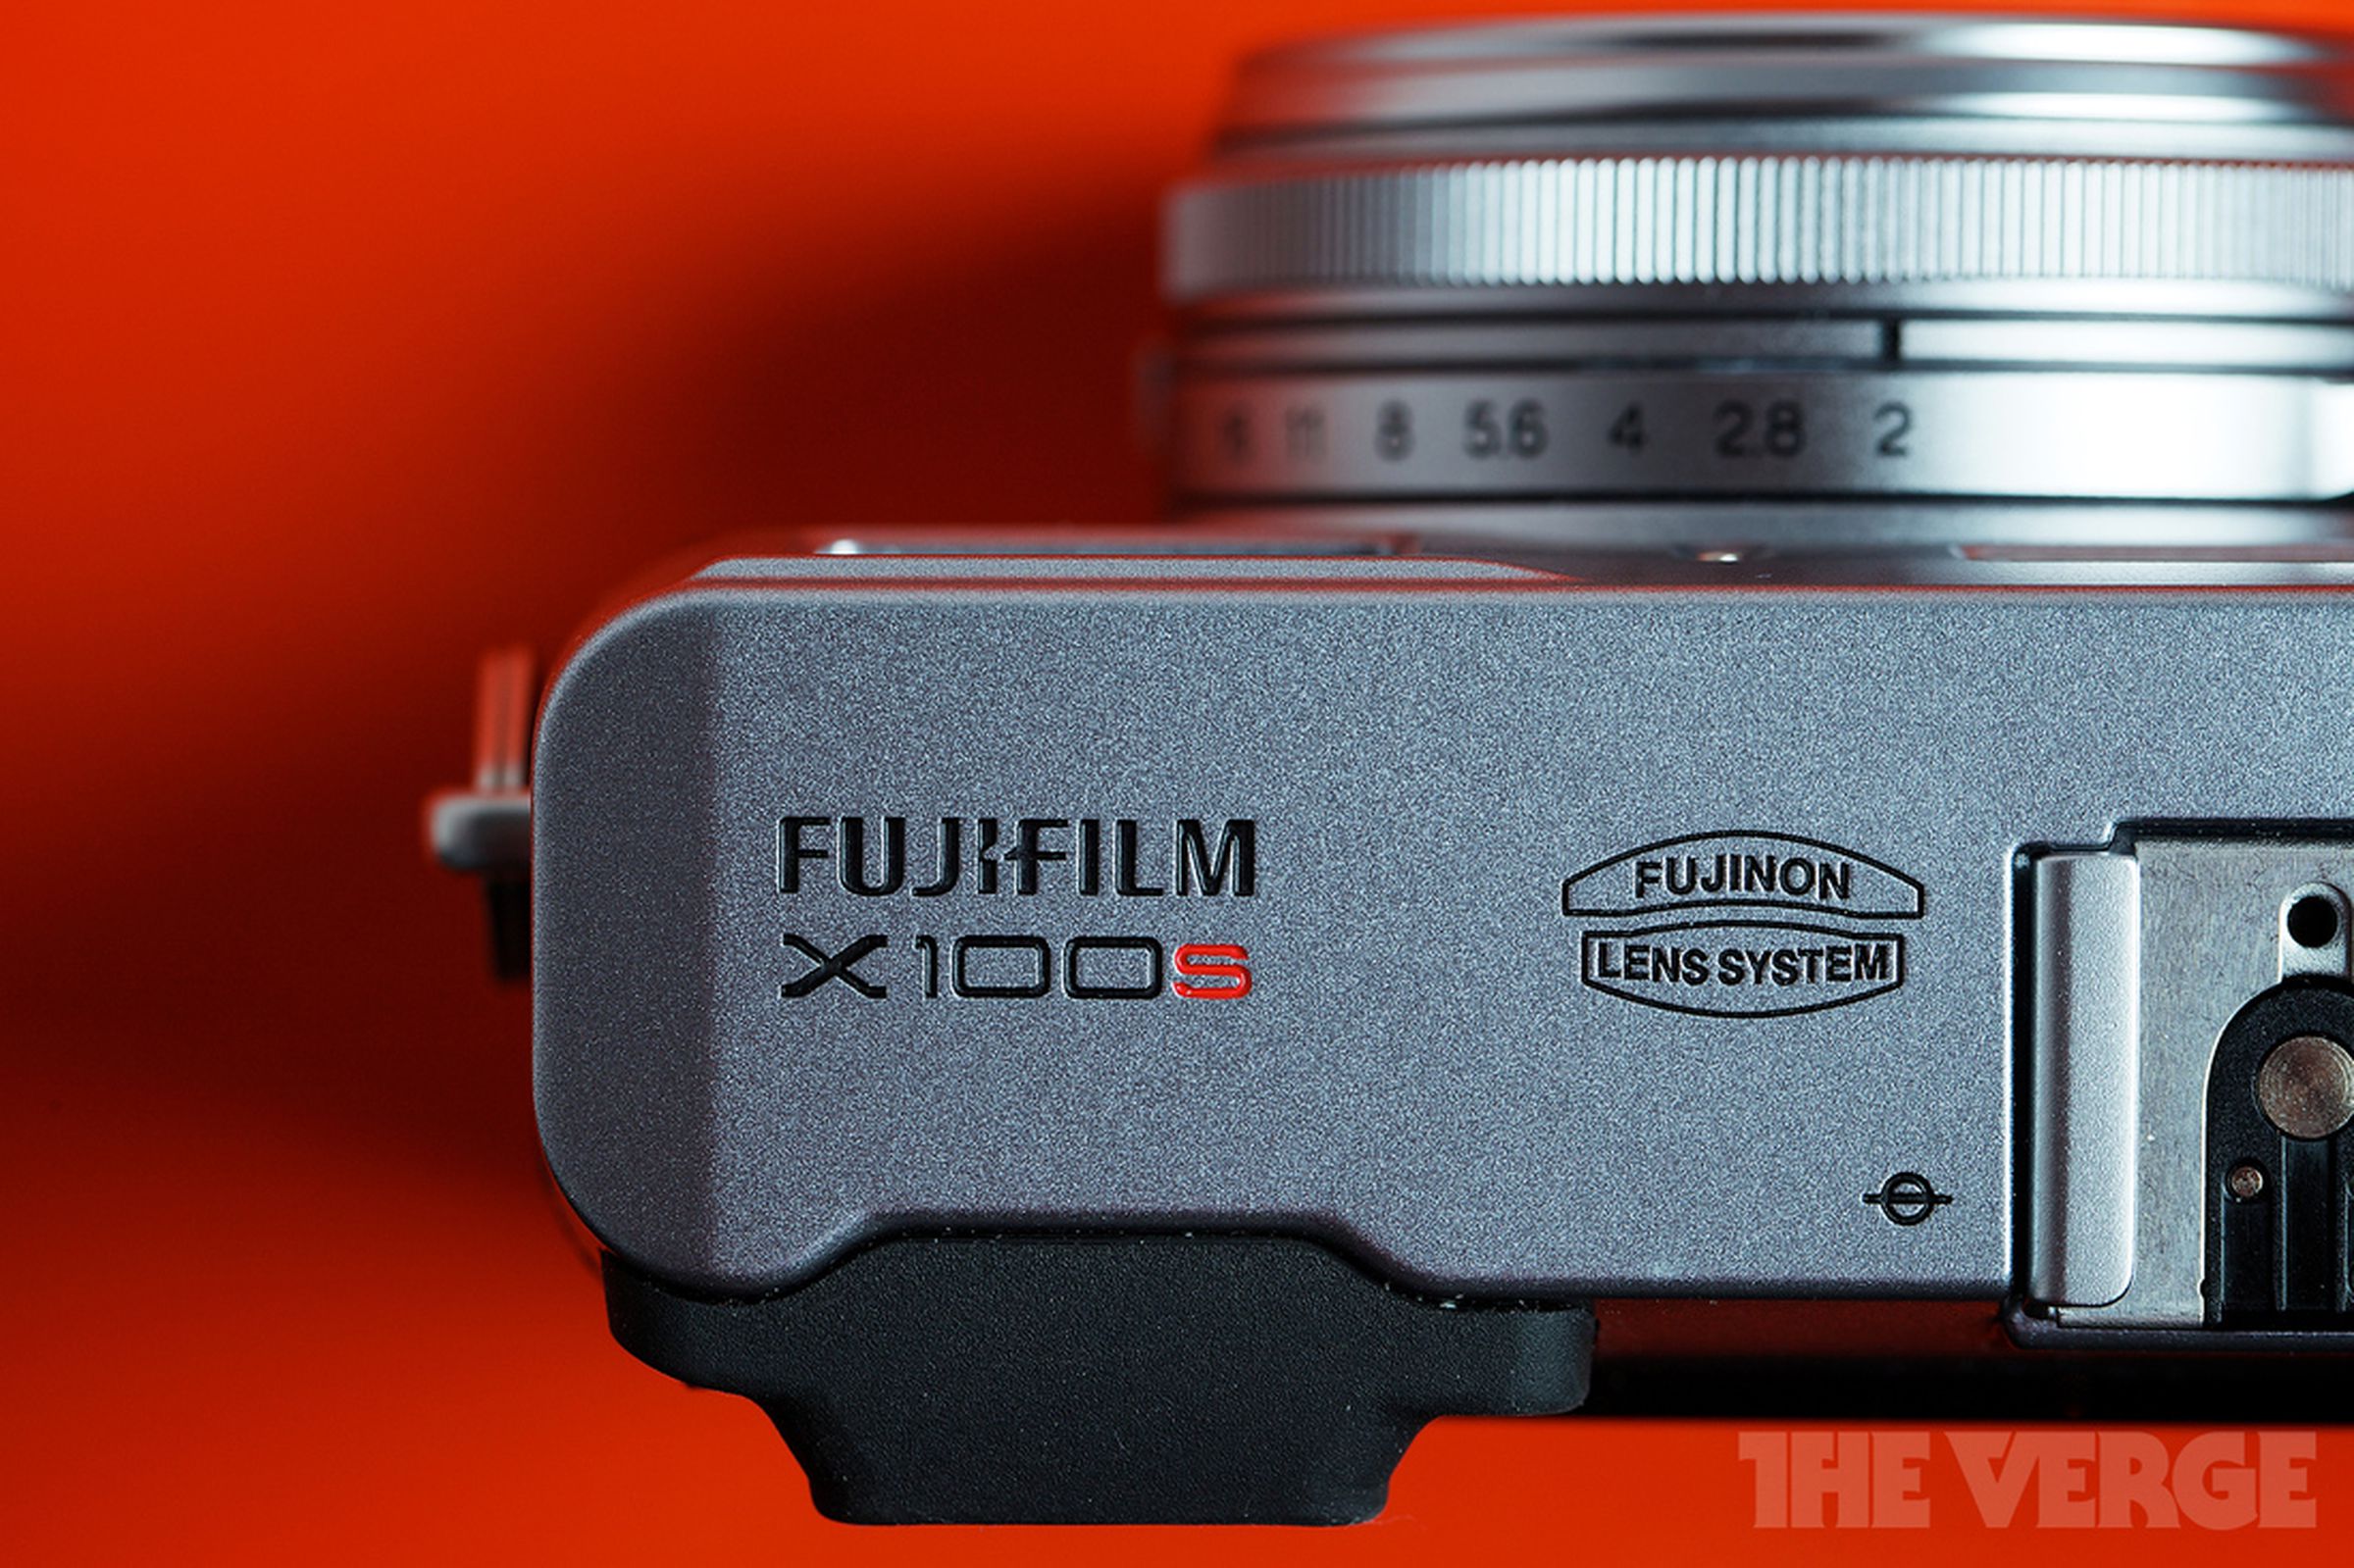 Fujifilm X100S review photos